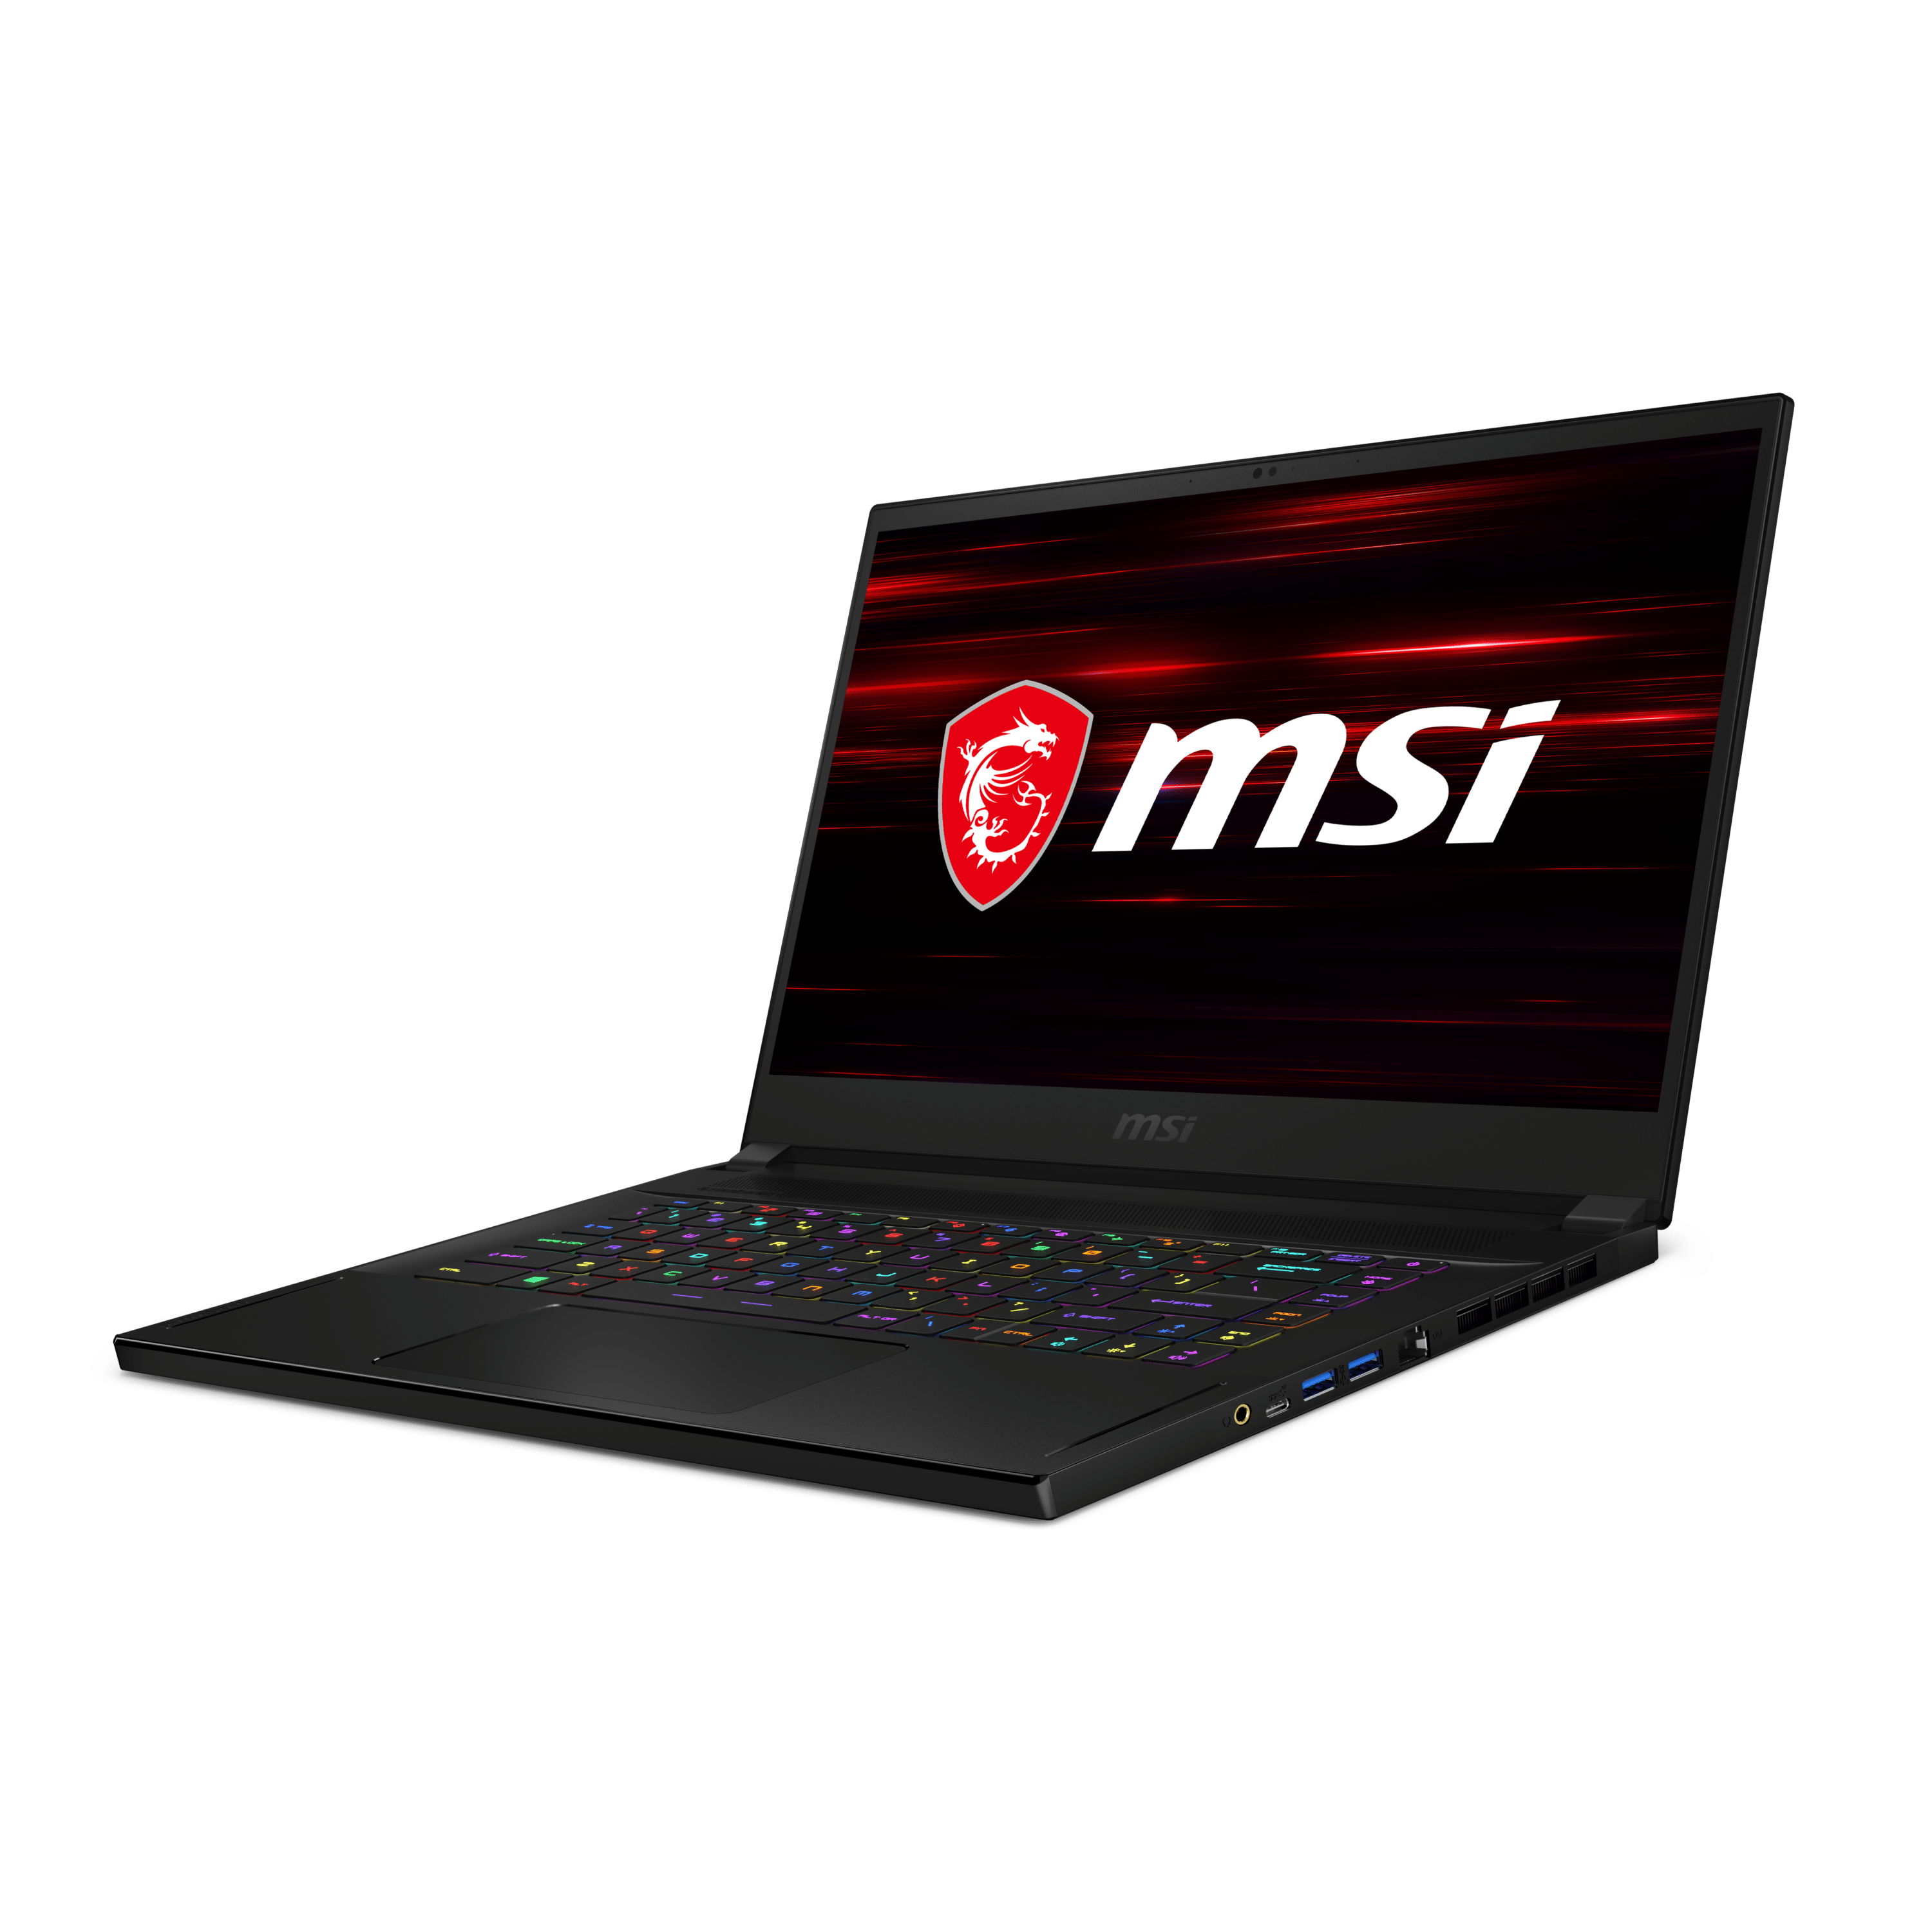 MSI presents new gaming laptops